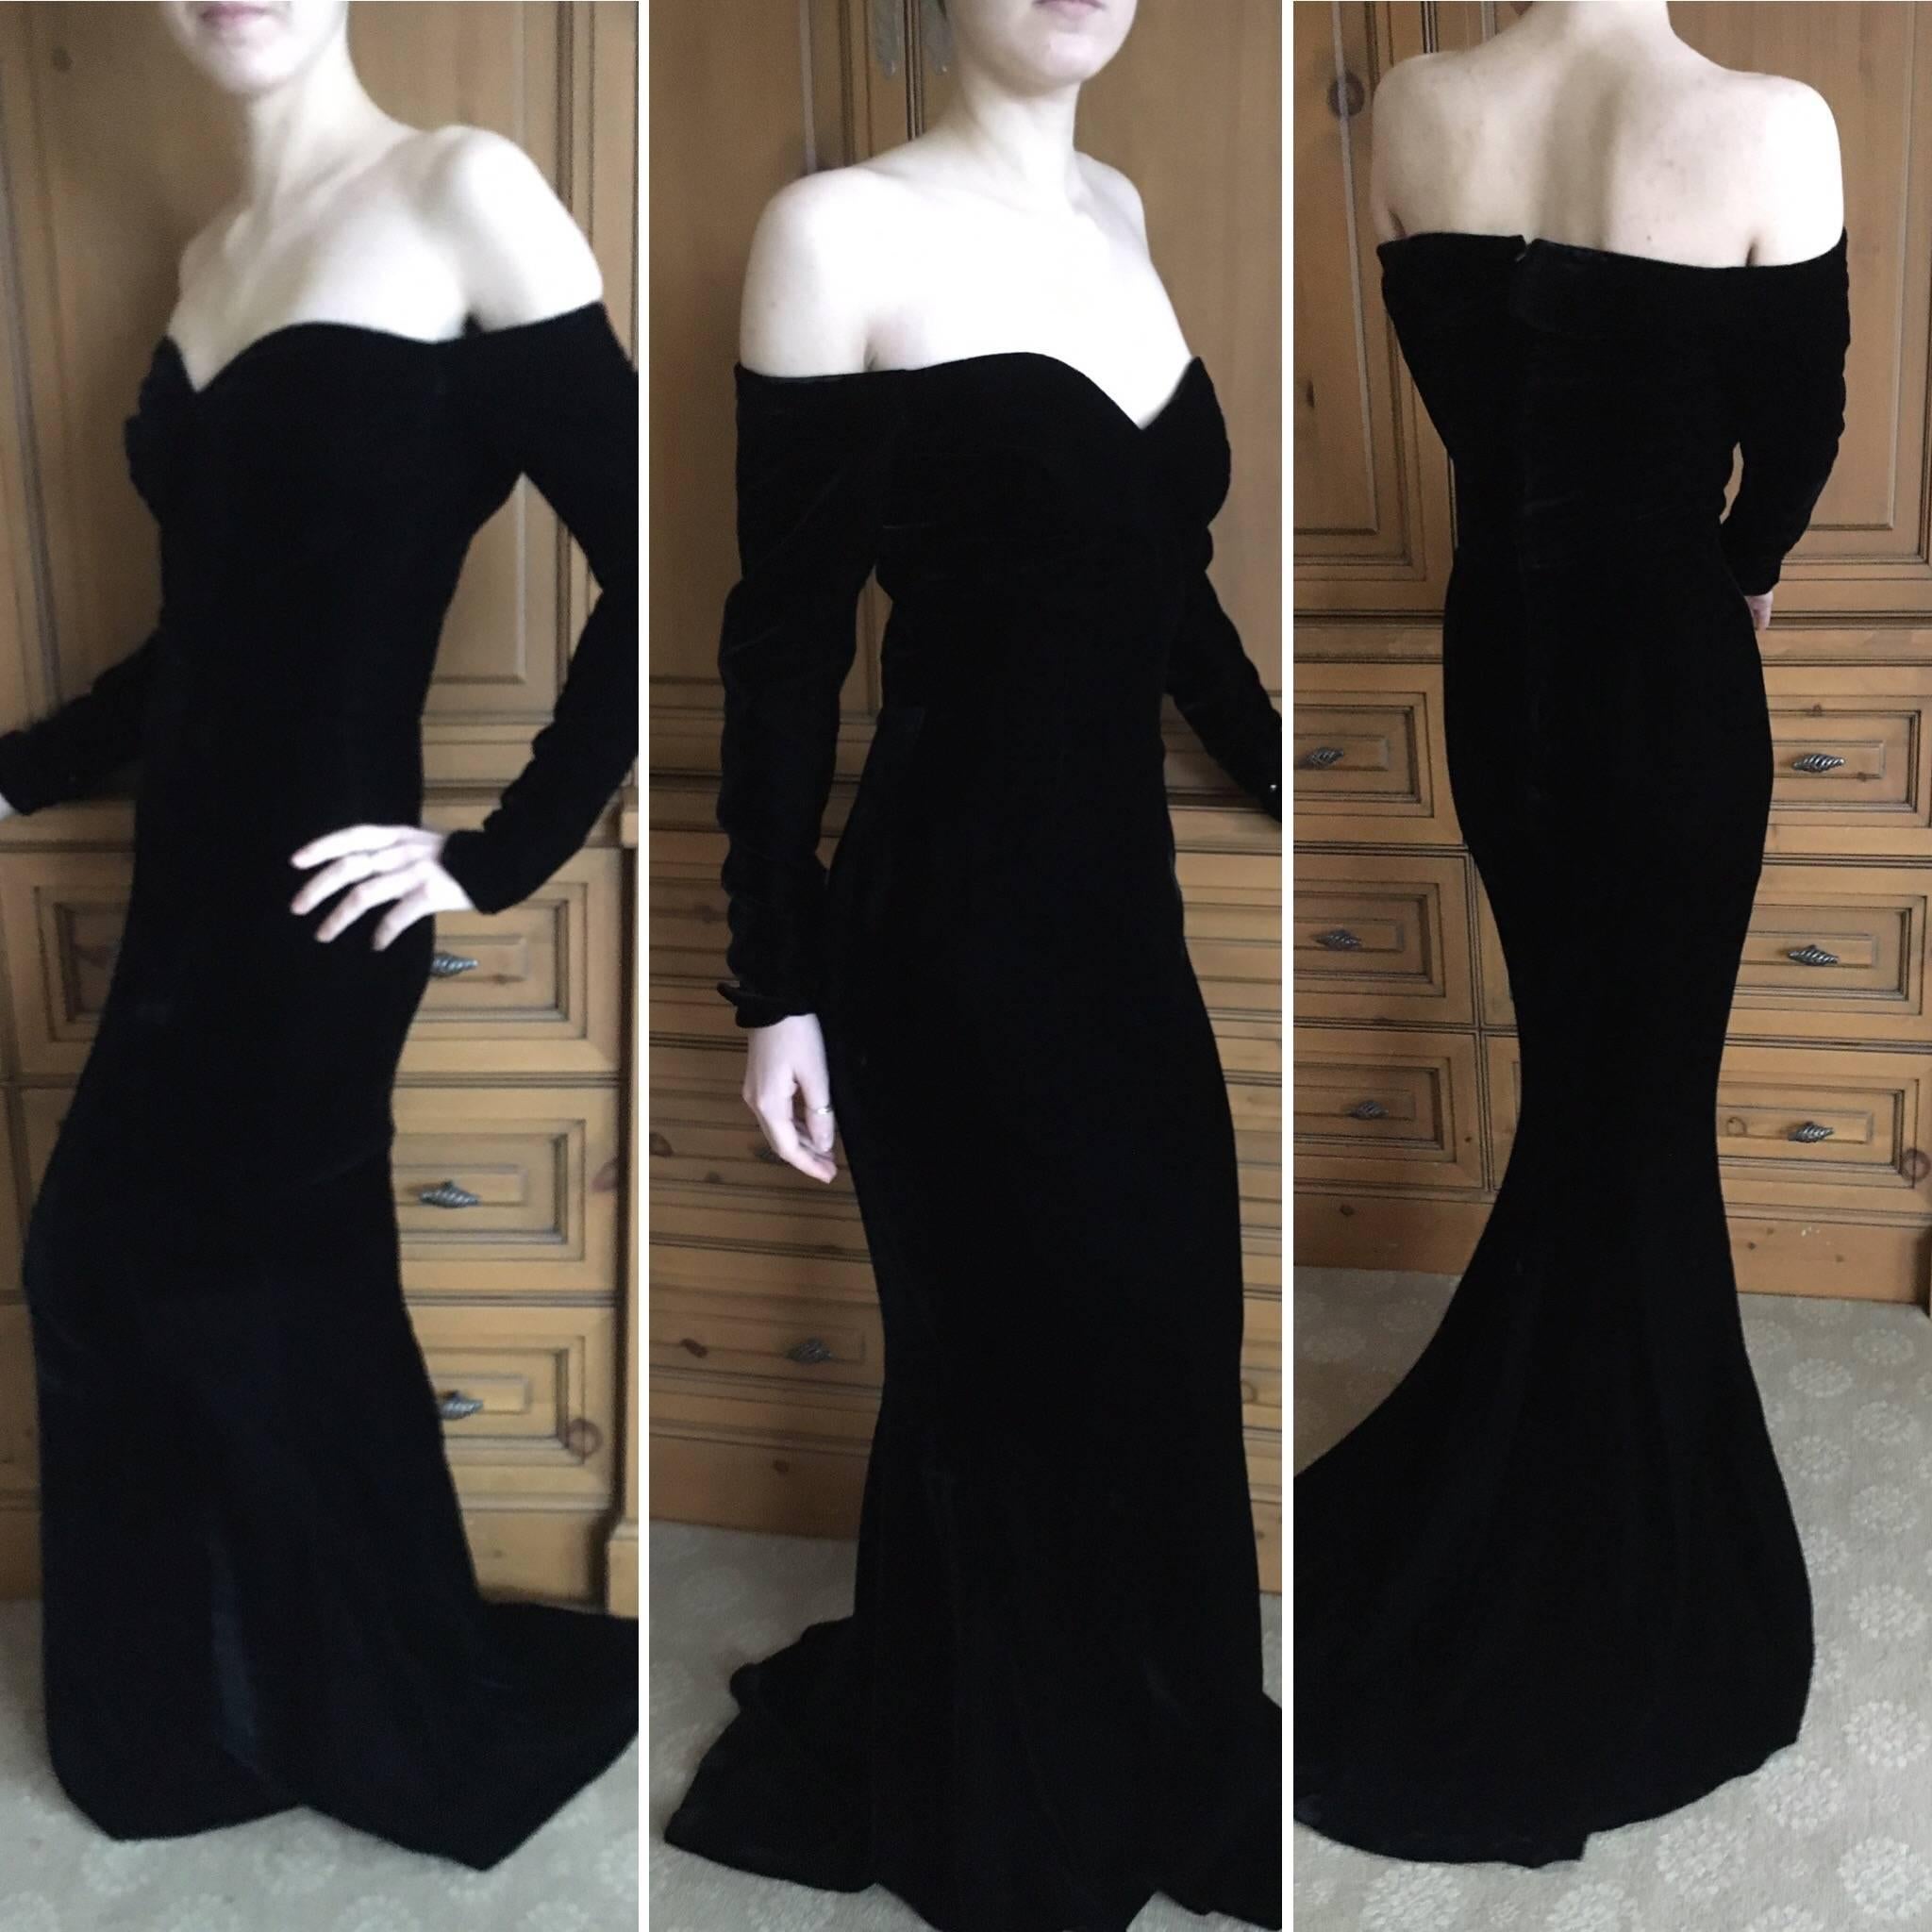 Spectacular black velvet sleeveless evening dress from Thierry Mugler circa 1989.

Size 38
Bust 38